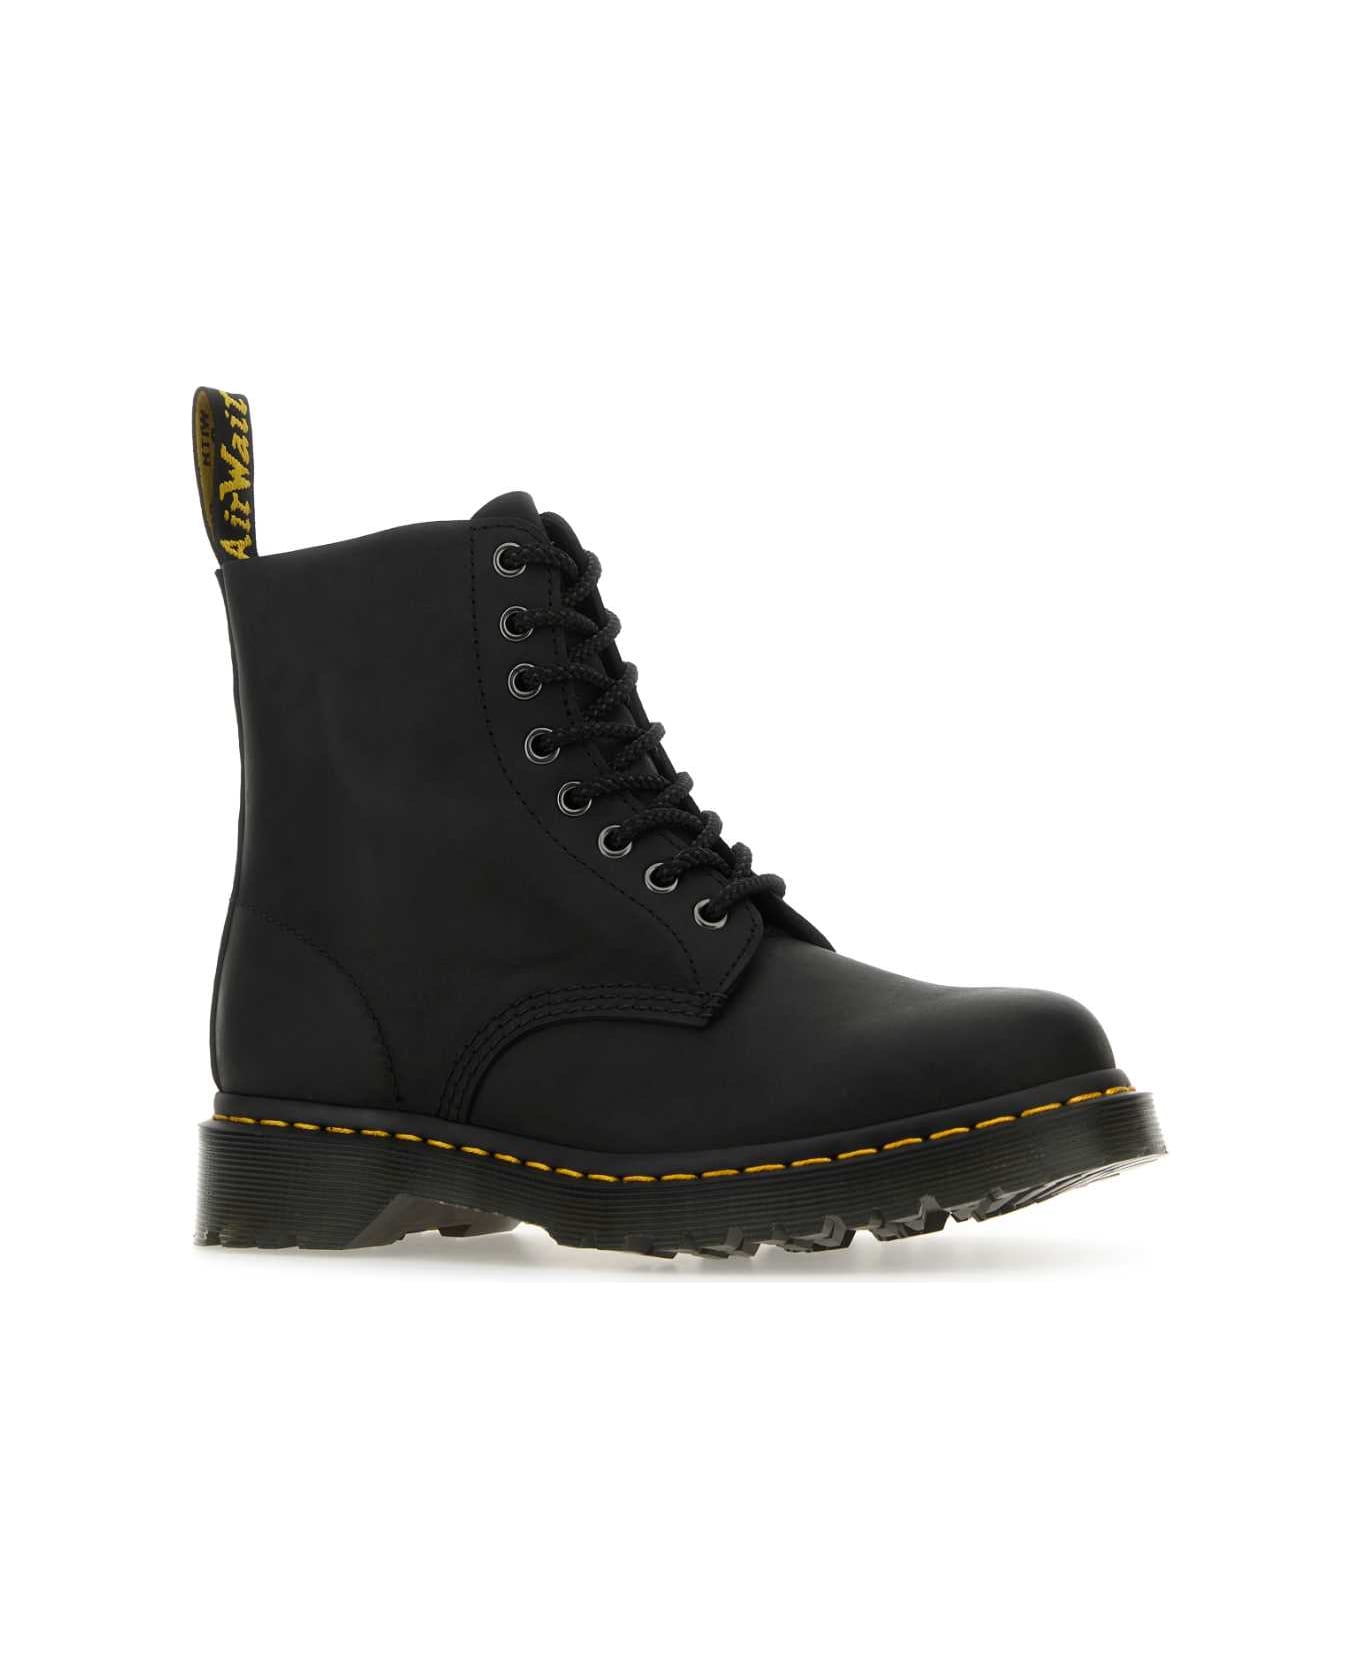 Dr. Martens Black Leather 1460 Ankle Boots - 1460PASCALBLAC